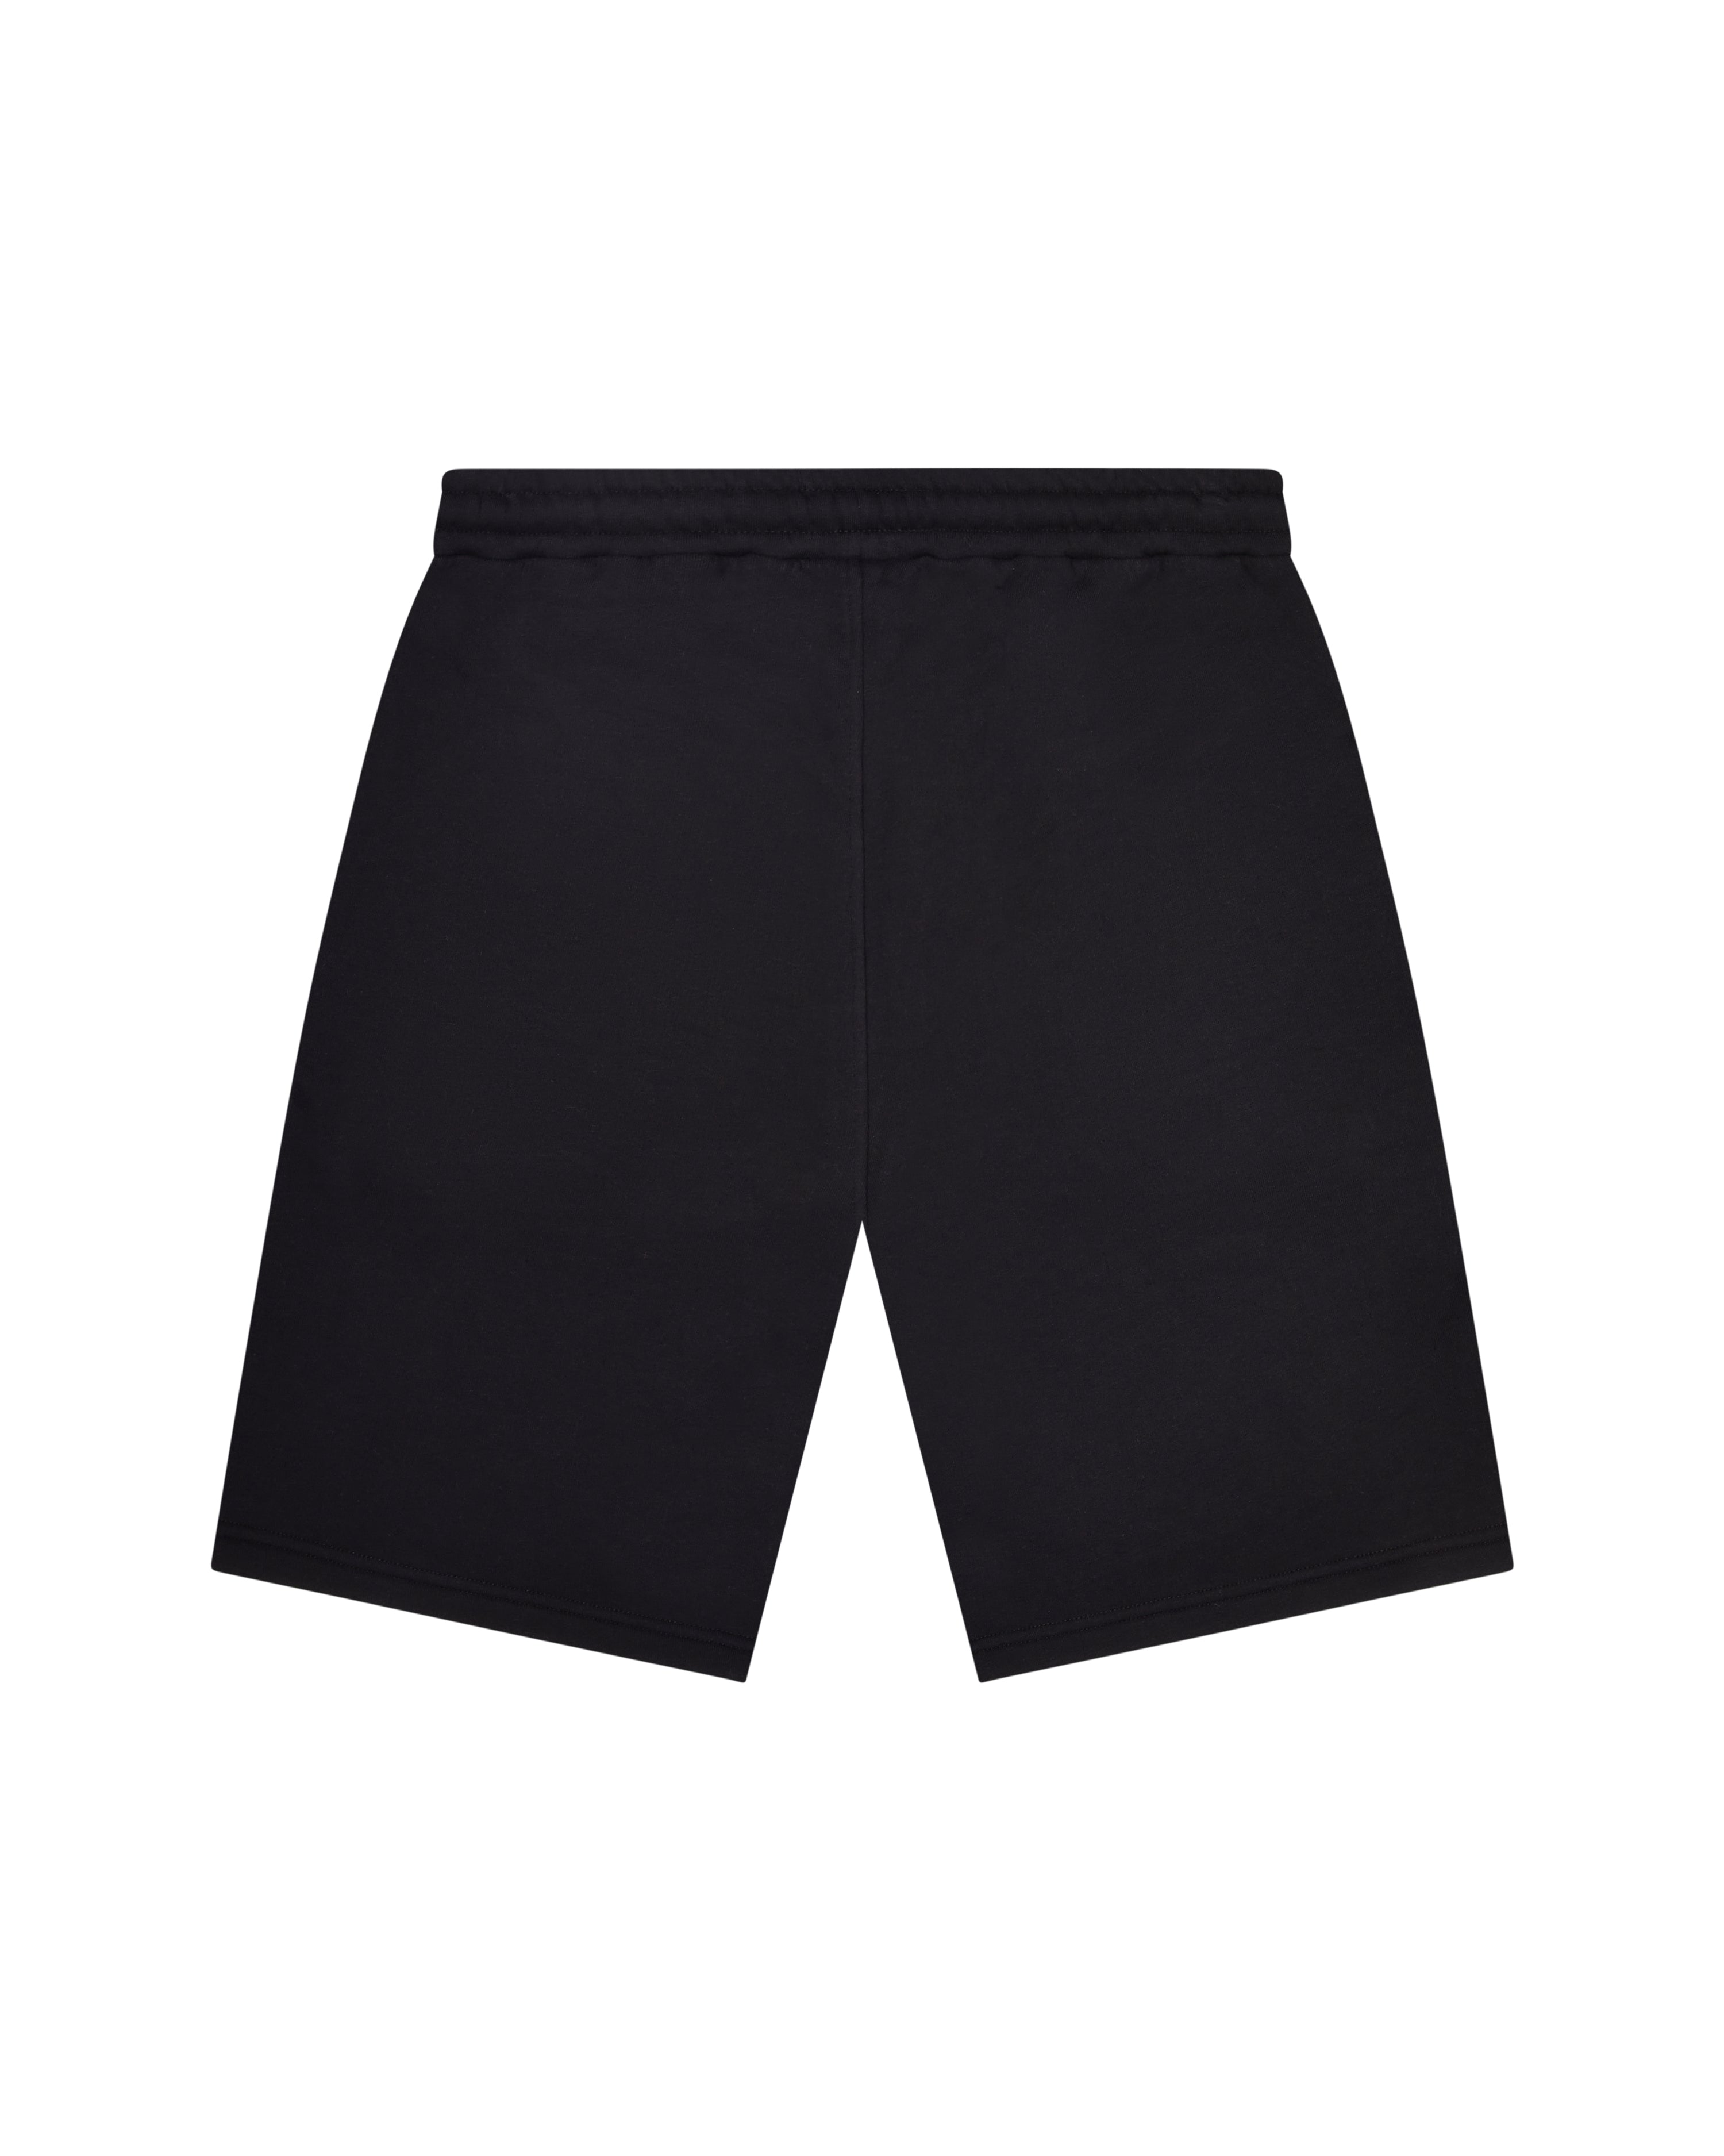 Irongate Arch Gel Shorts - Black/Grey